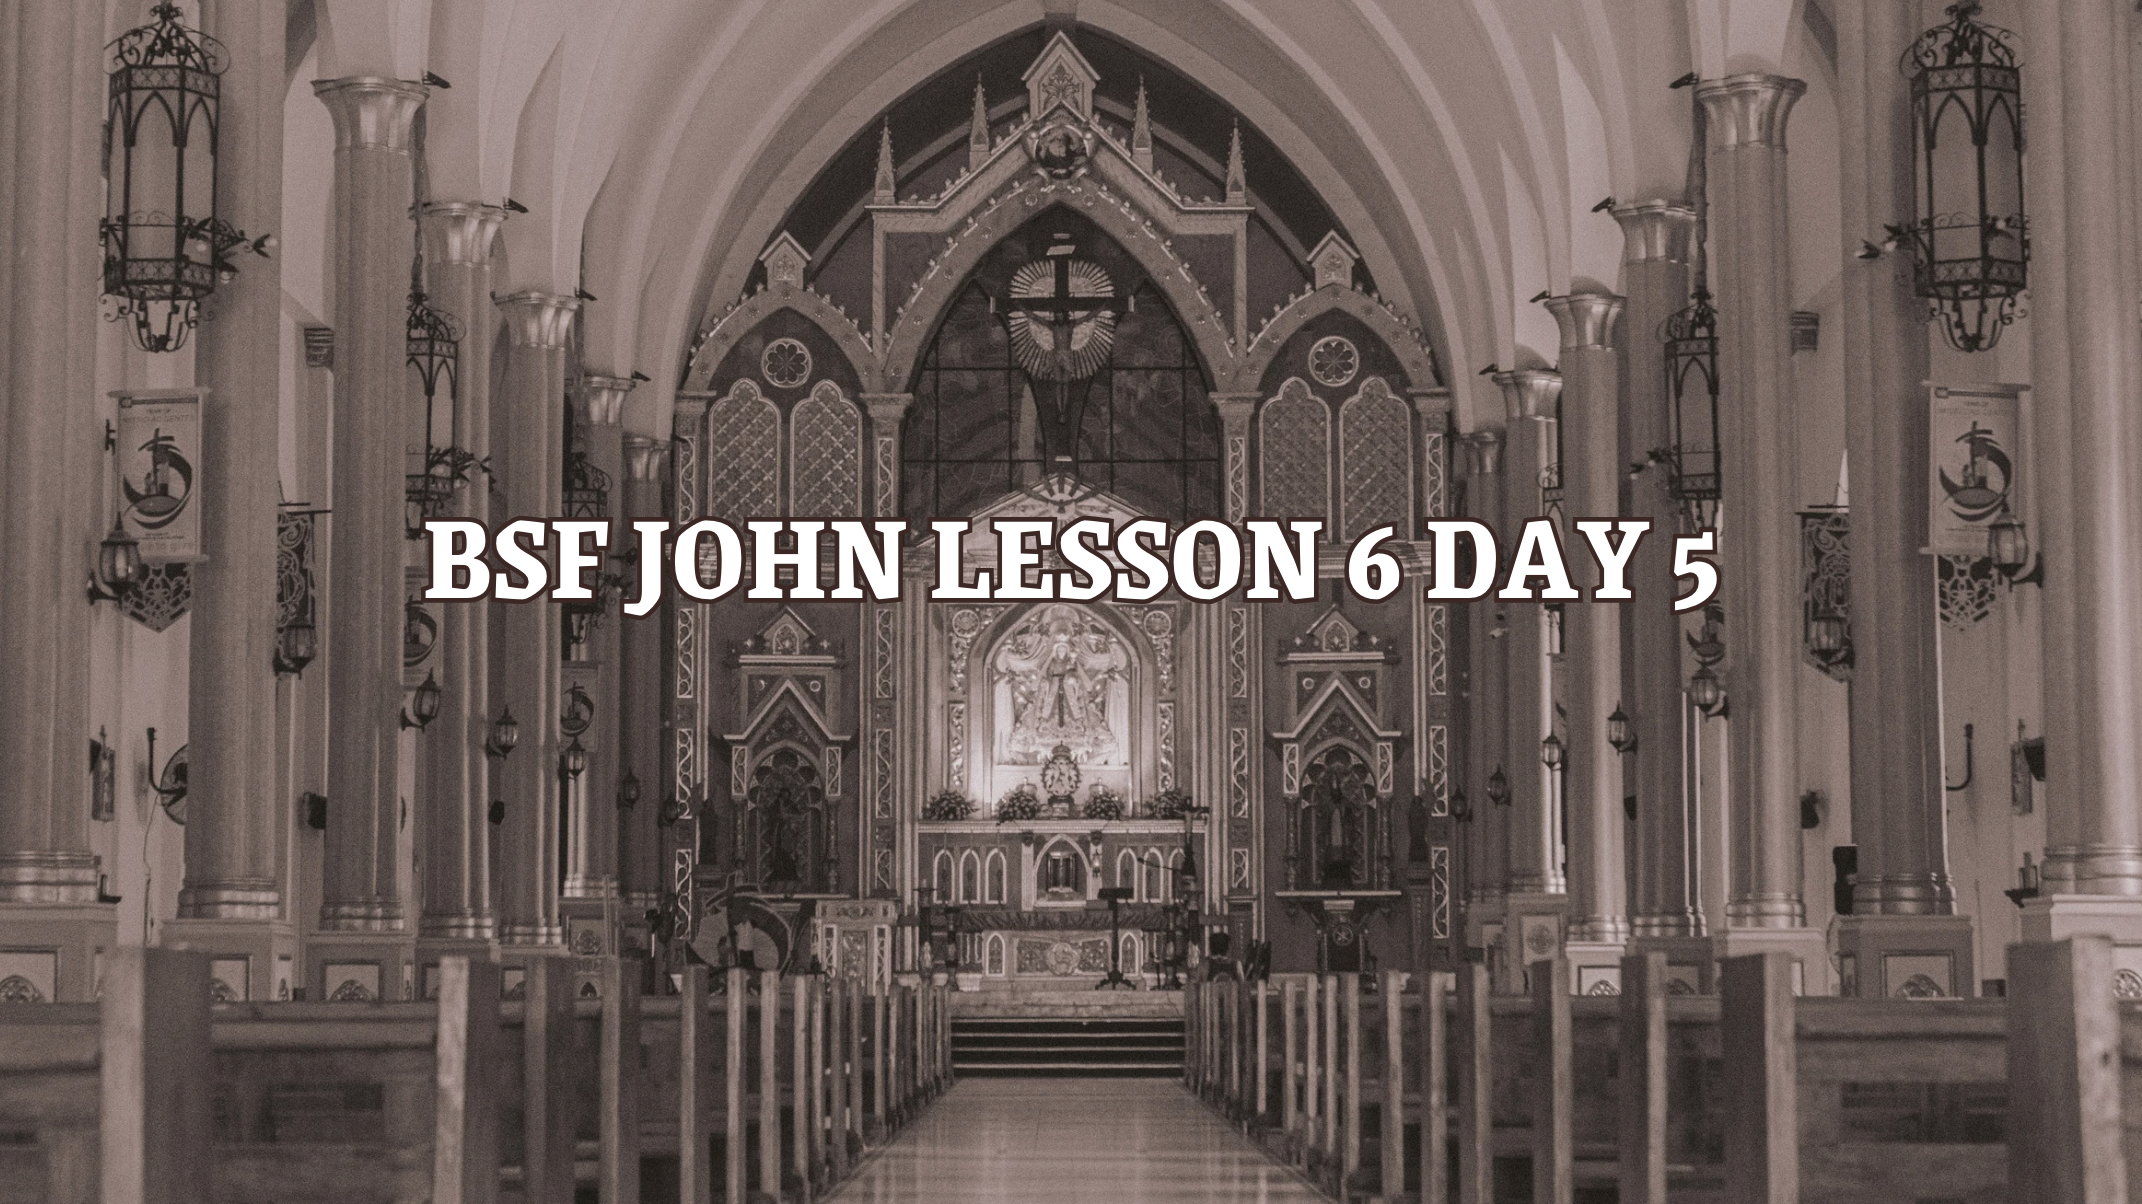 BSF John Lesson 6 Day 5